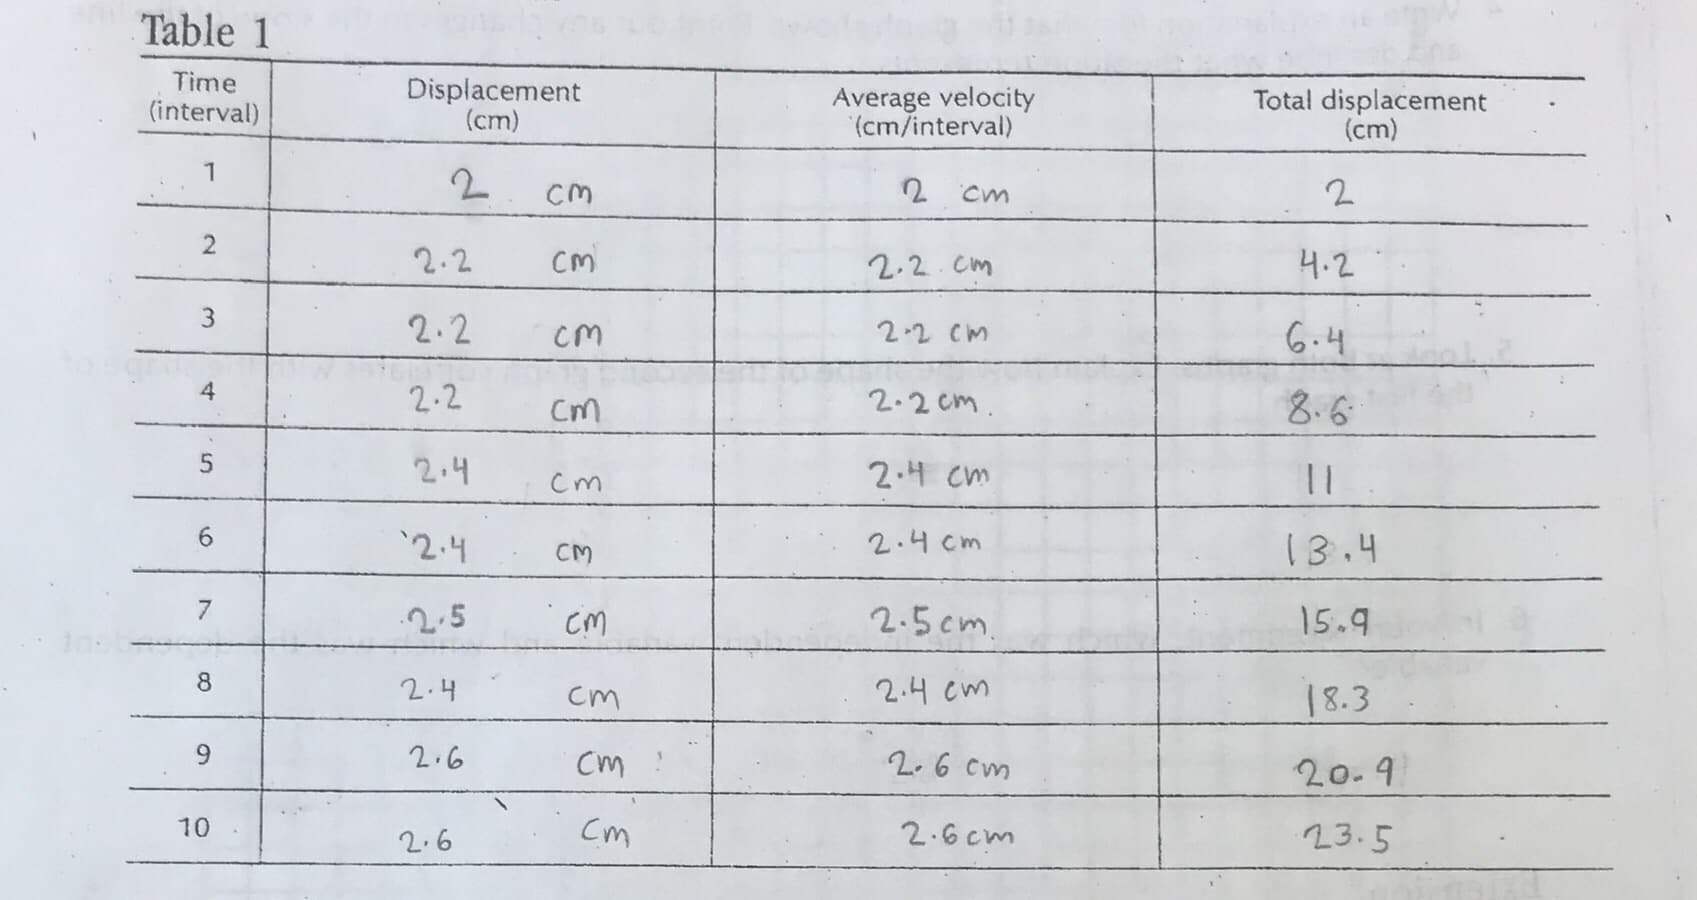 Table 1
Time
Displacement
(cm)
Average velocity
(cm/interval)
Total displacement
(cm)
(interval)
1
CM
Cm
2
CM
2.2
4.2
2.2 Cm
3
2.2
2 2 Cm
G.4
cM
4
2.2
2.2 Cm
2.6
CnM
5
2.4
2.4 Cm
Cm
6
2.4
2.4 cm
13.4
СМ
7
2.5cm
2.5
15.9
CM
2.4 cm
2.4
8.3
Cm
9
2.6
2.6 cm
Cm
20.4
Cm
10
2.6cm
23.5
2.6
